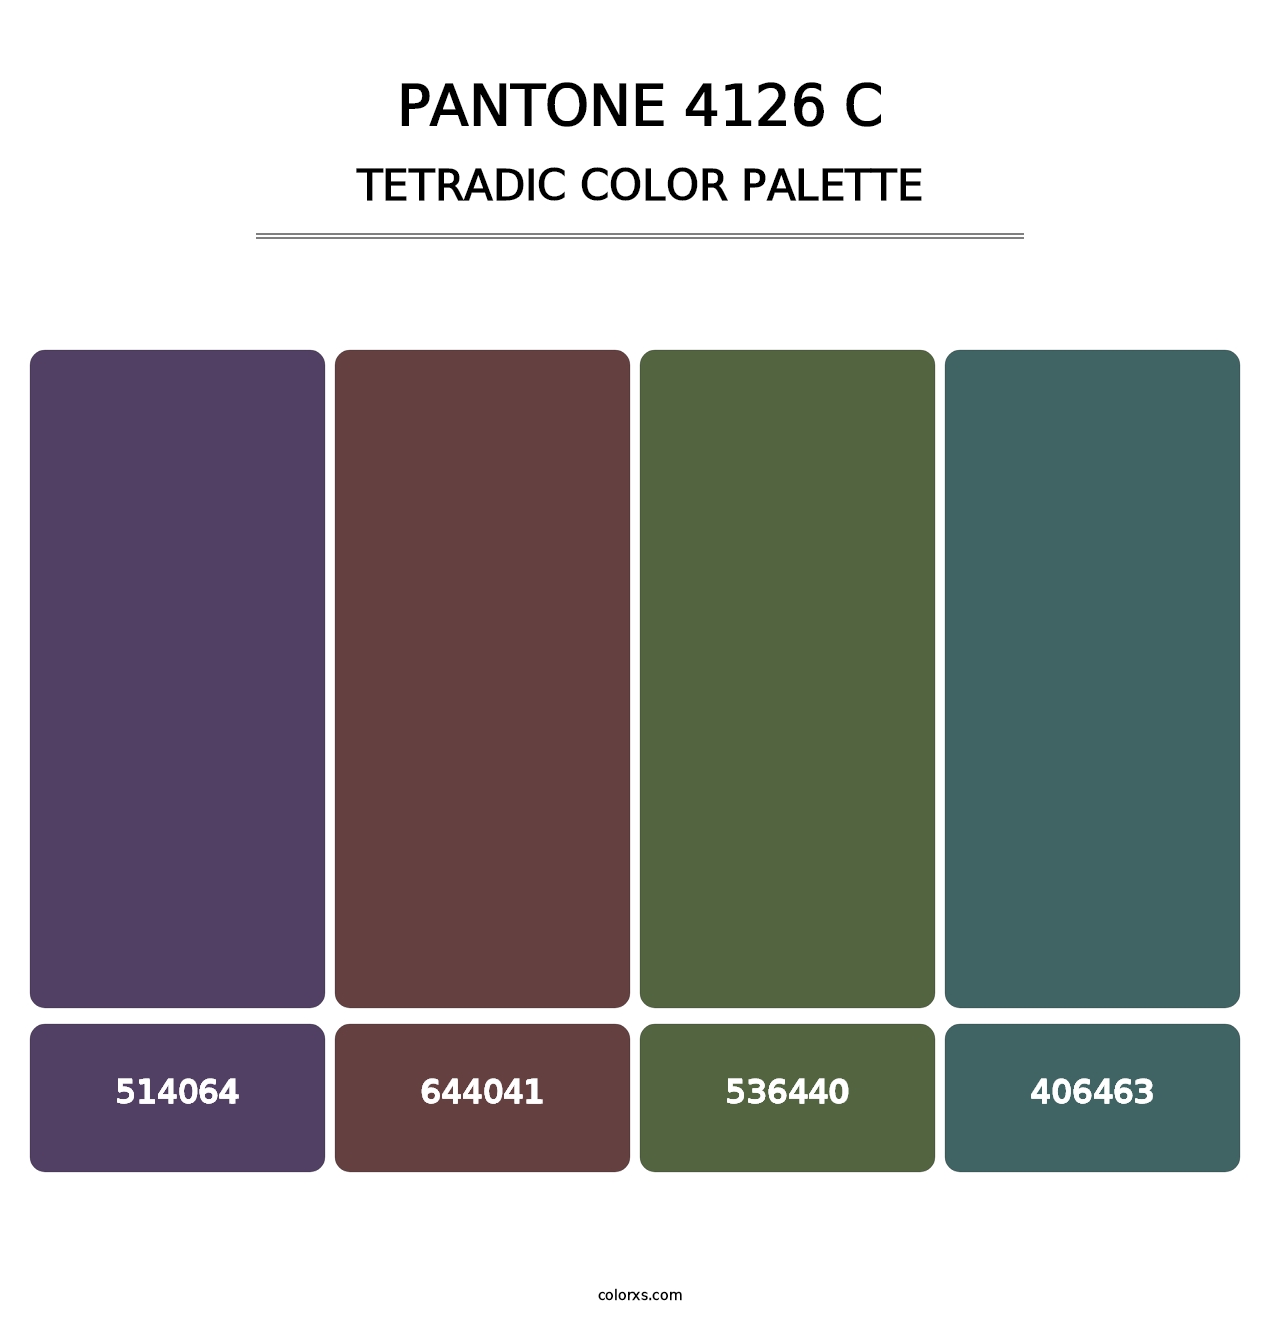 PANTONE 4126 C - Tetradic Color Palette